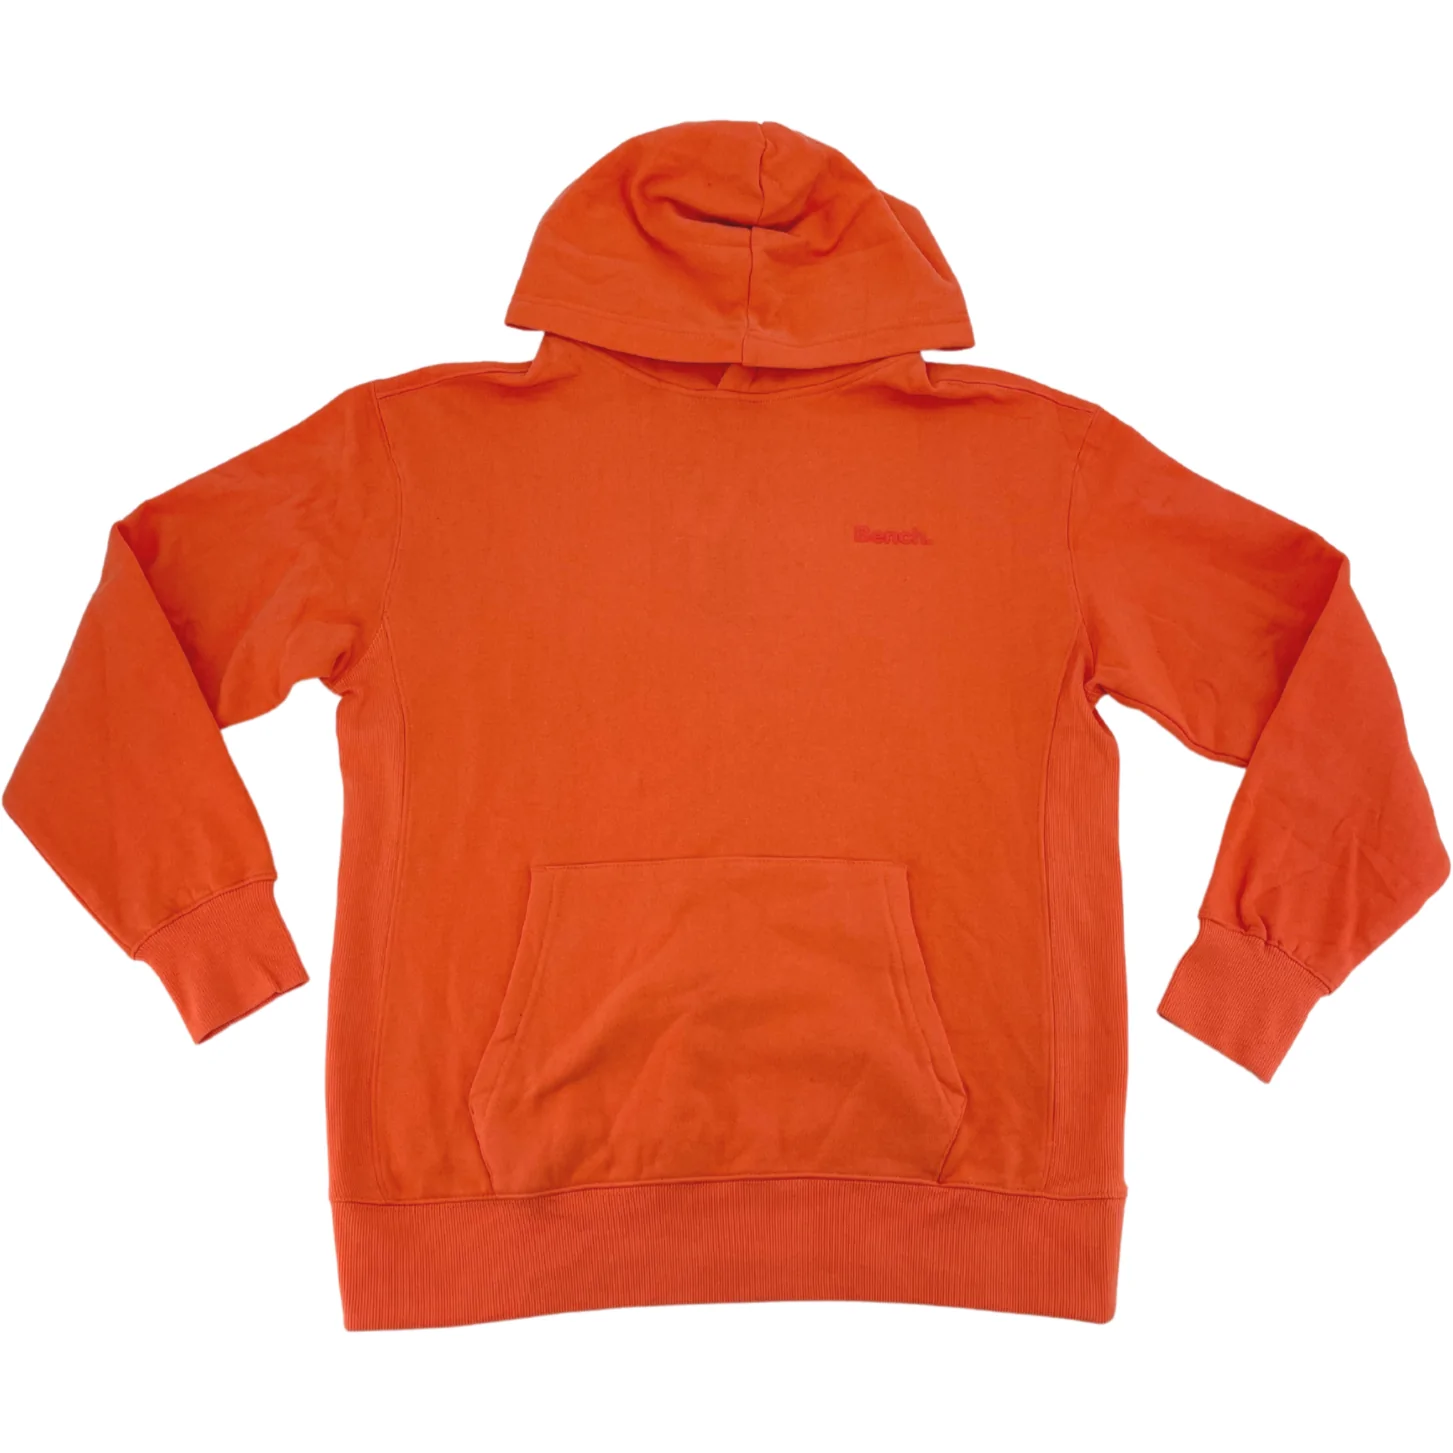 Bench Women's Hoodie / Bright Orange / Size Small